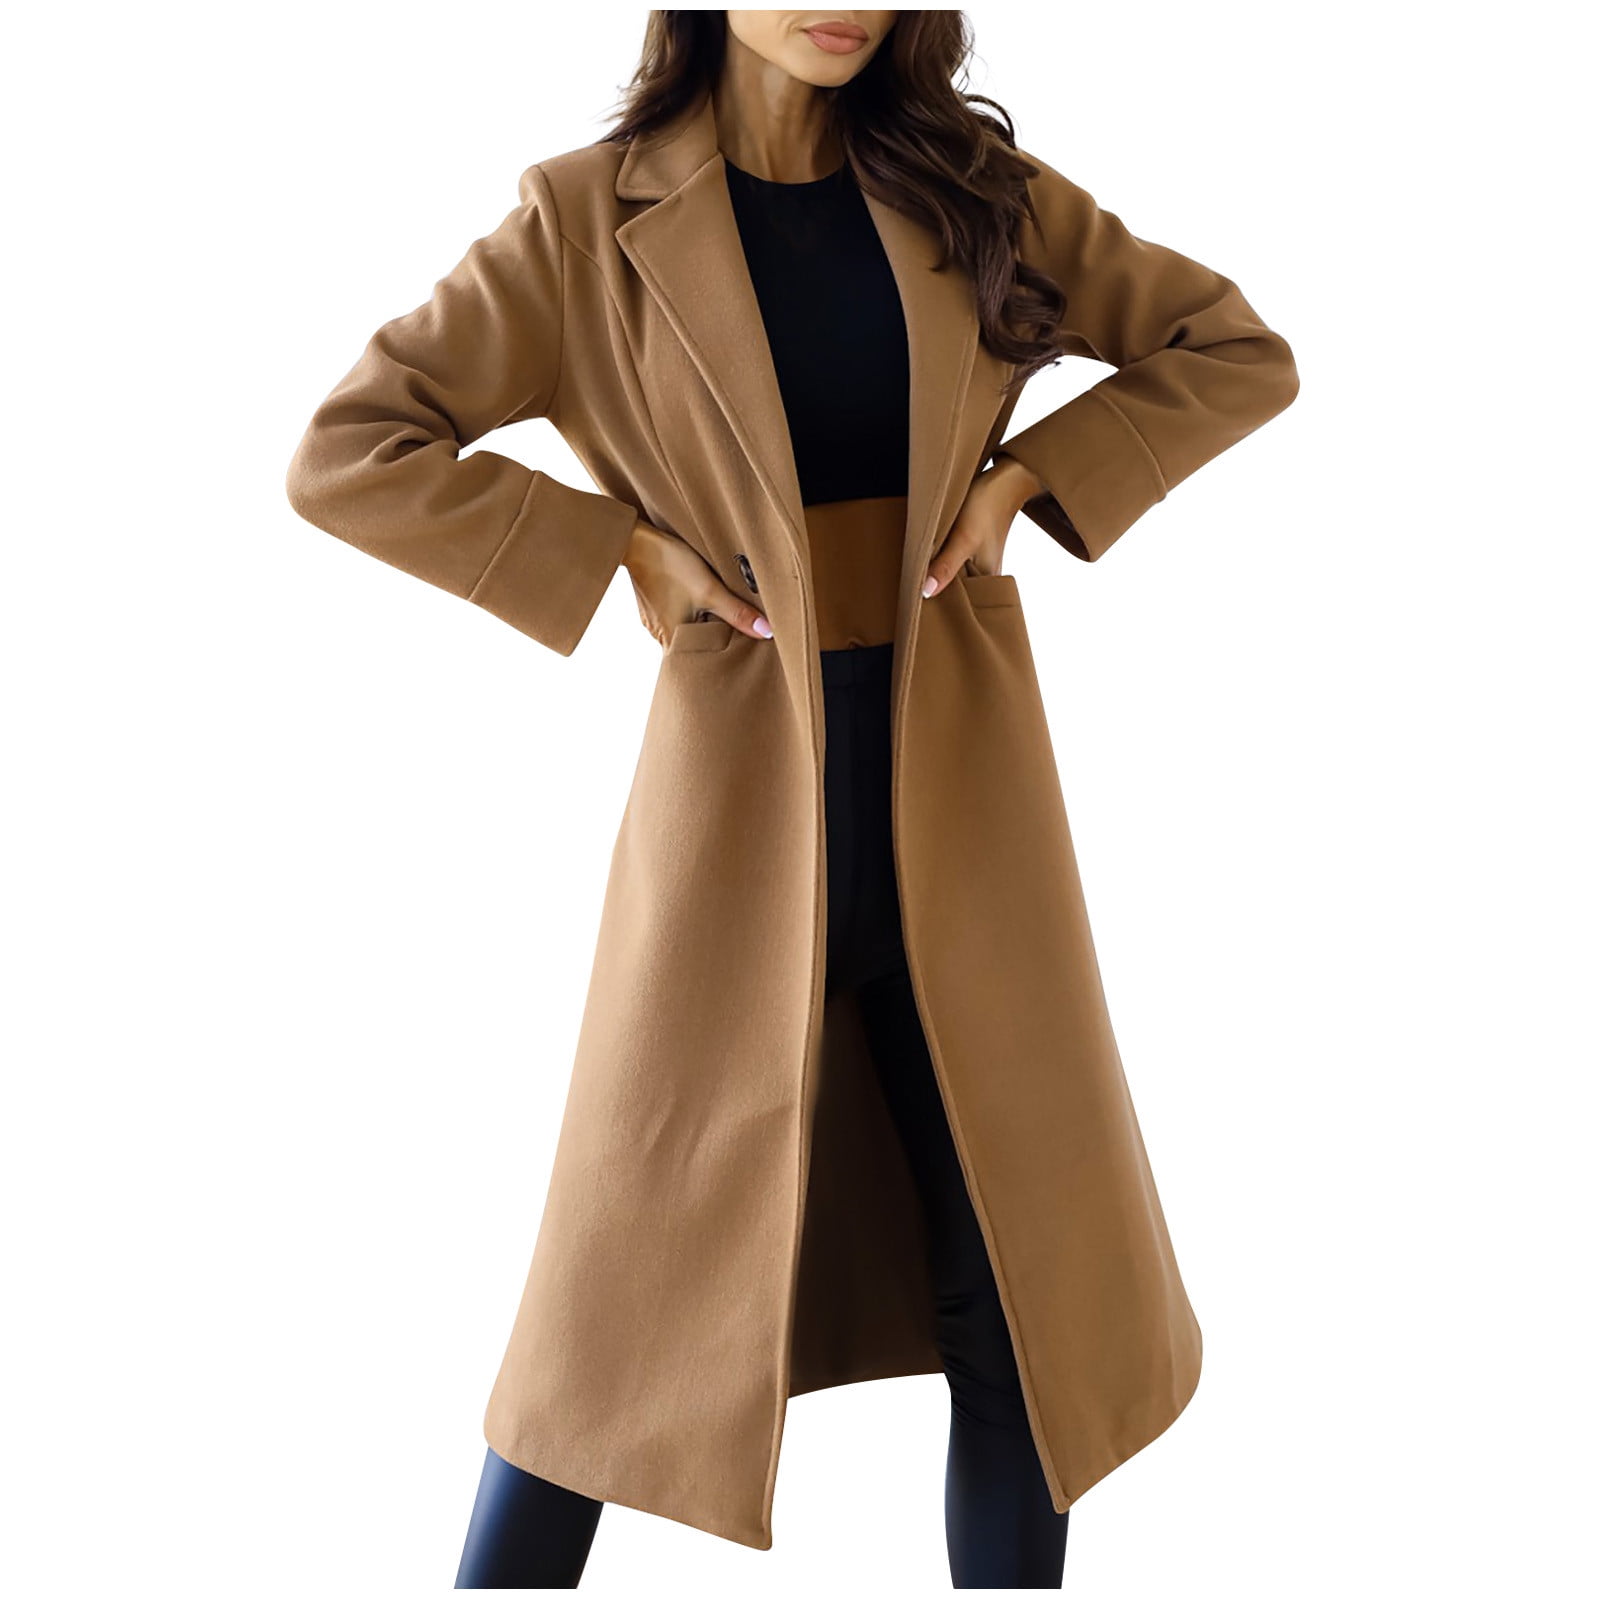  Winter Coats for Women Wool Blend 3/4 Sleeve Mid-Long